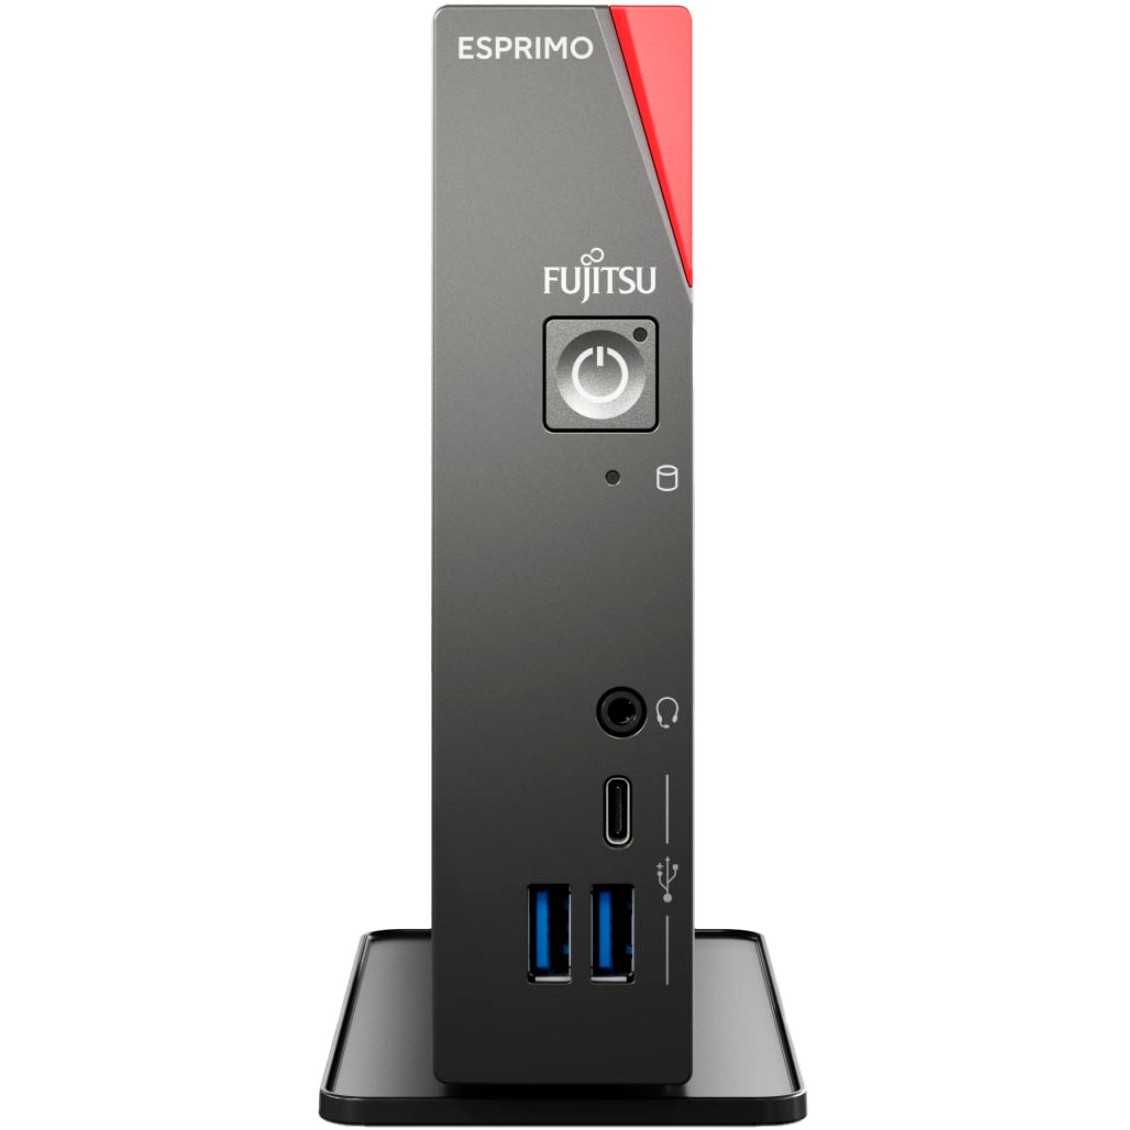 Fujitsu LKN:G913EP0002DE, Marken PCs, Fujitsu ESPRIMO PC  (BILD1)